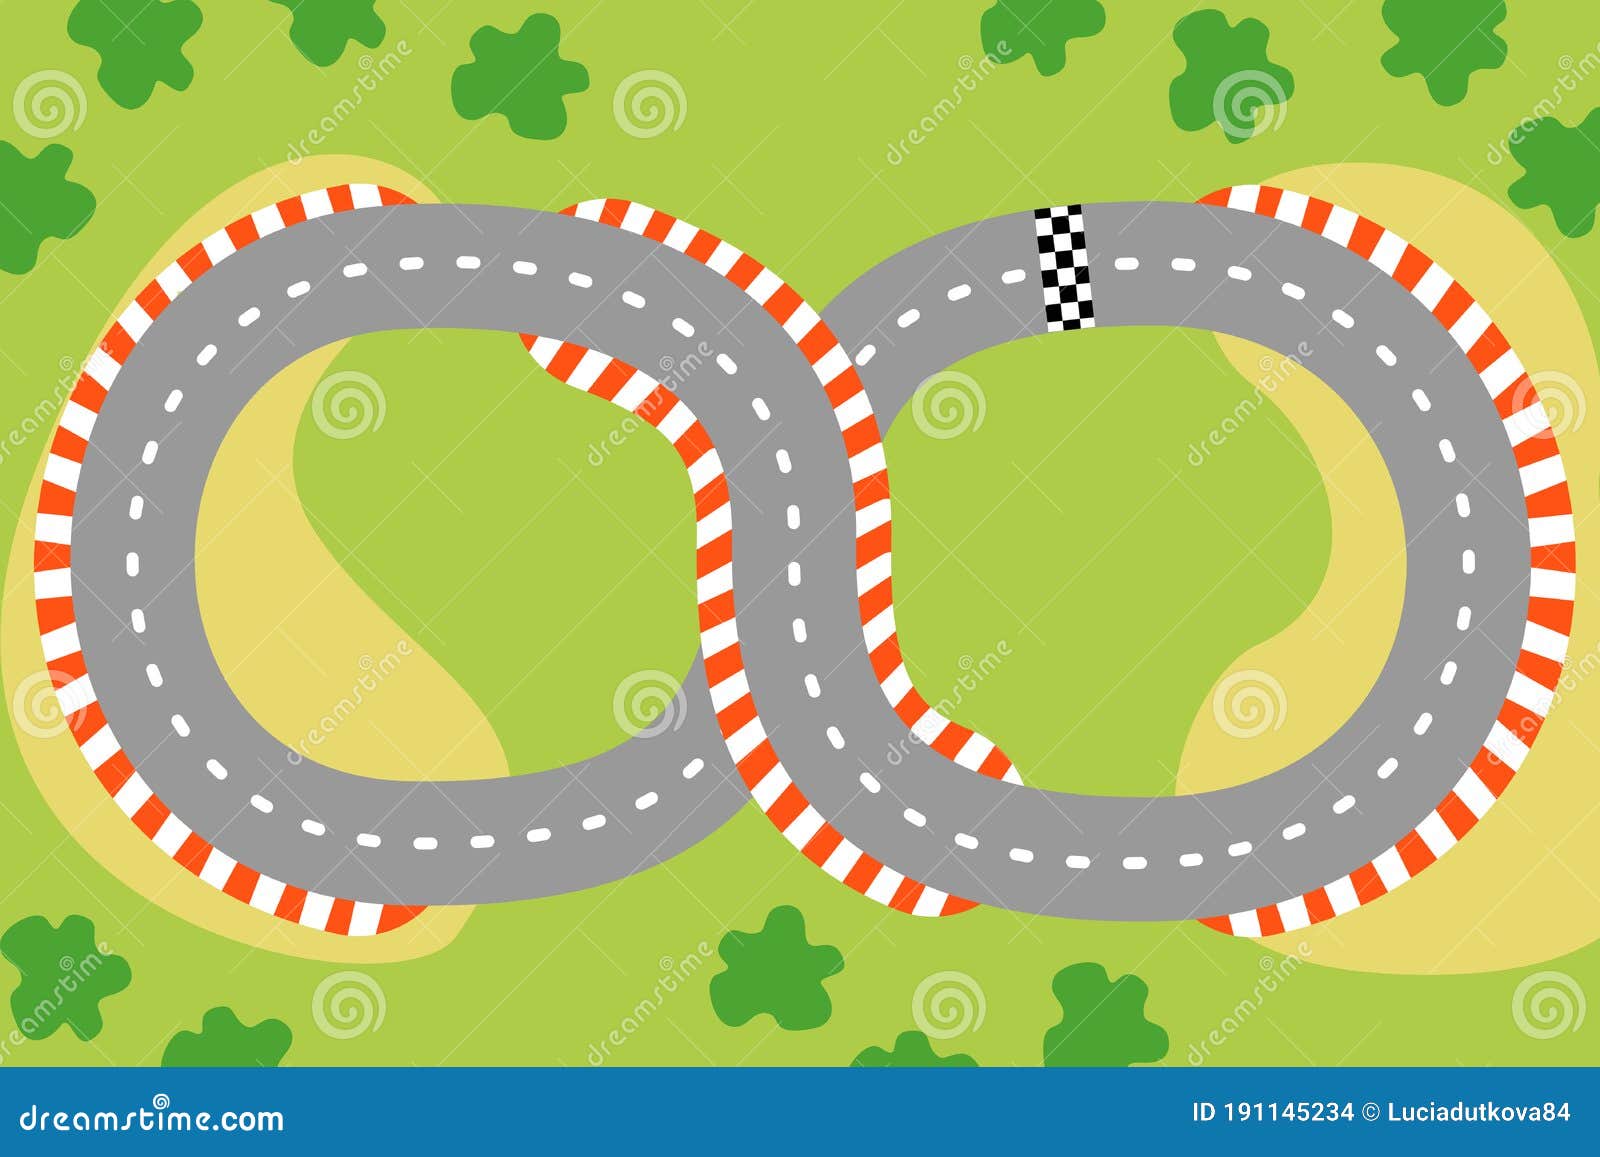 Race Track Curve Road Vector Illustration | CartoonDealer.com #83082516